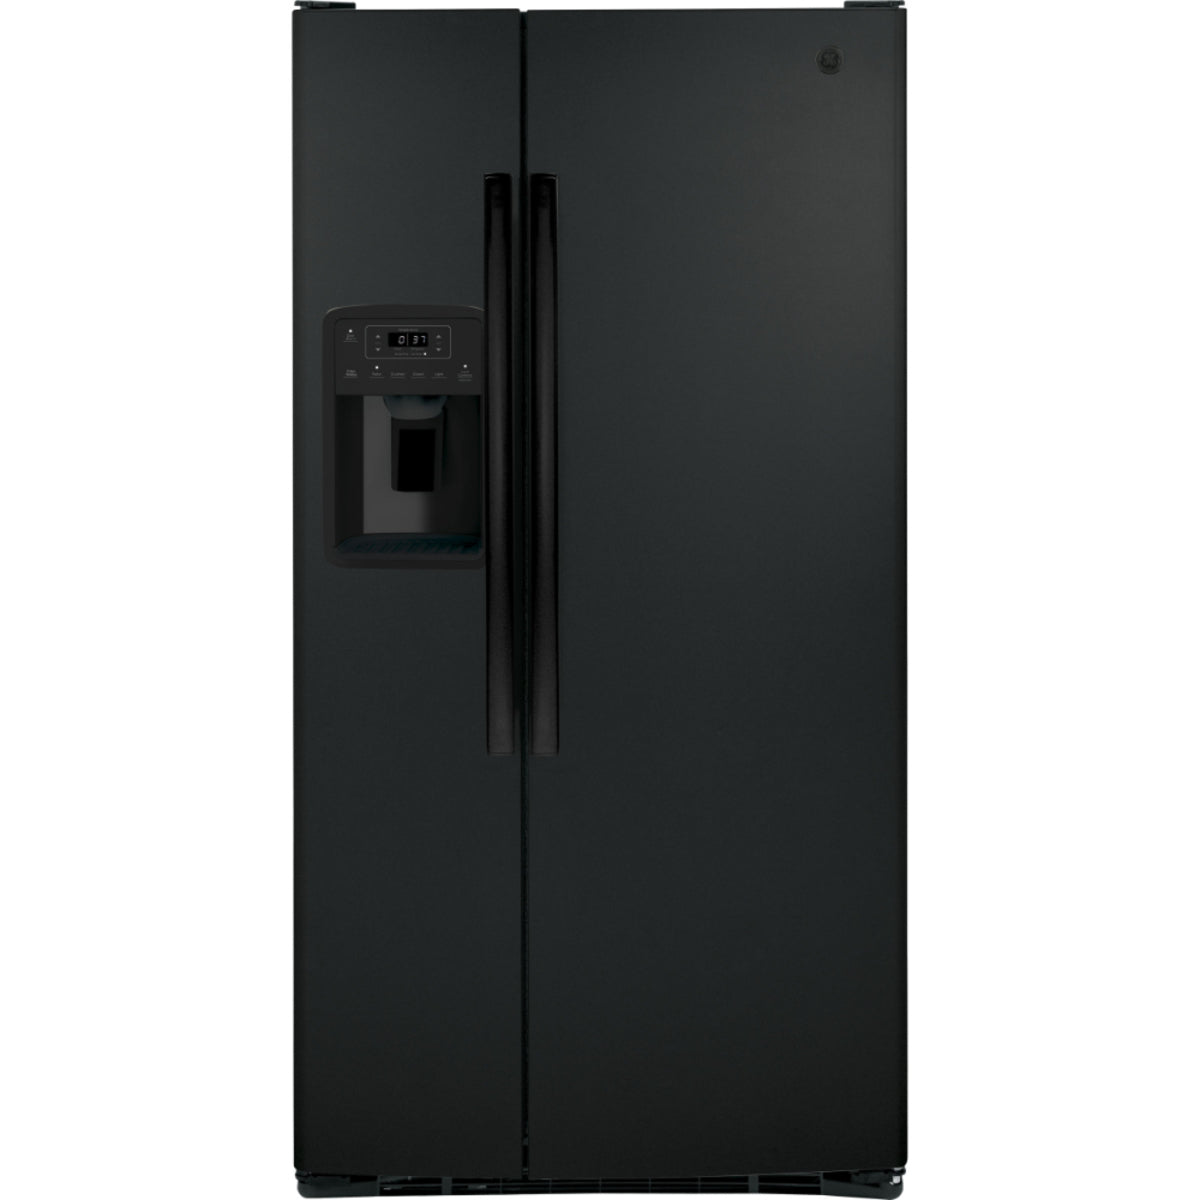 GE - 32.75 Inch 23 cu. ft Side by Side Refrigerator in Black - GSS23GGPBB